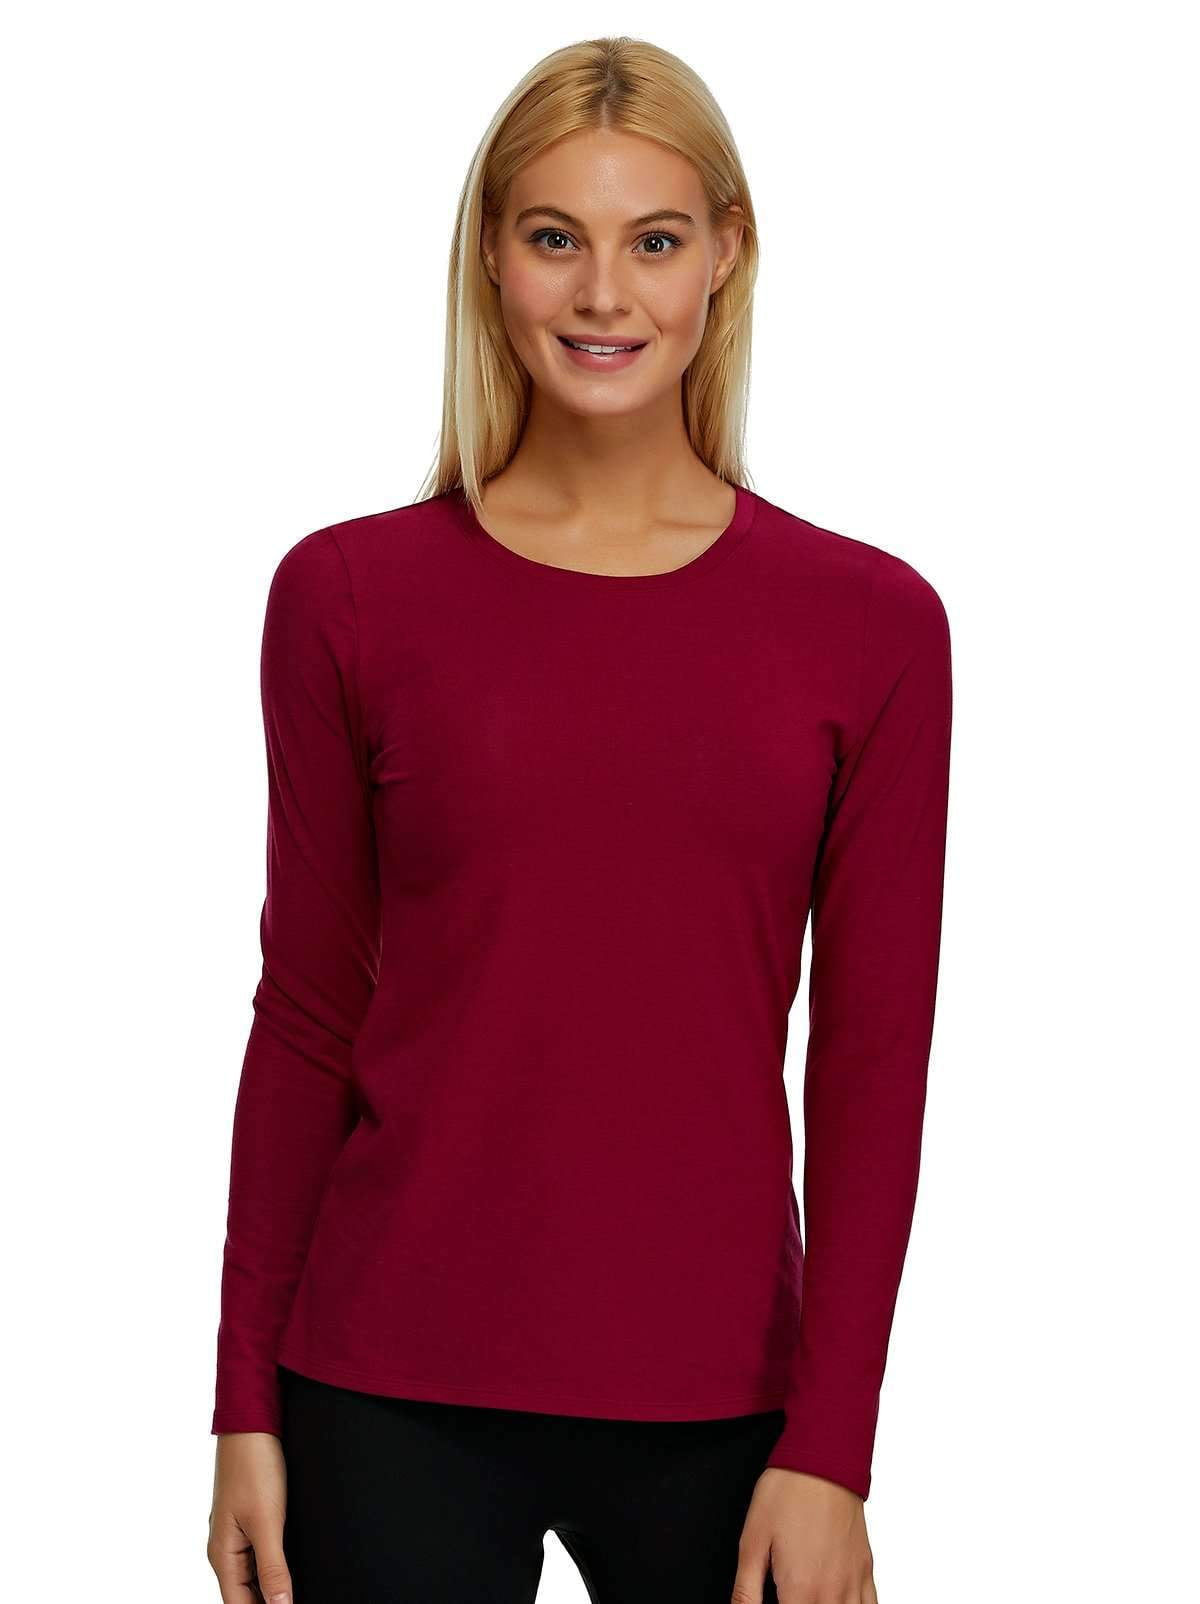 | Felina Modal Shirt Crew Neck & Heather Grey, | Long Sleeve Cotton Large) (Medium